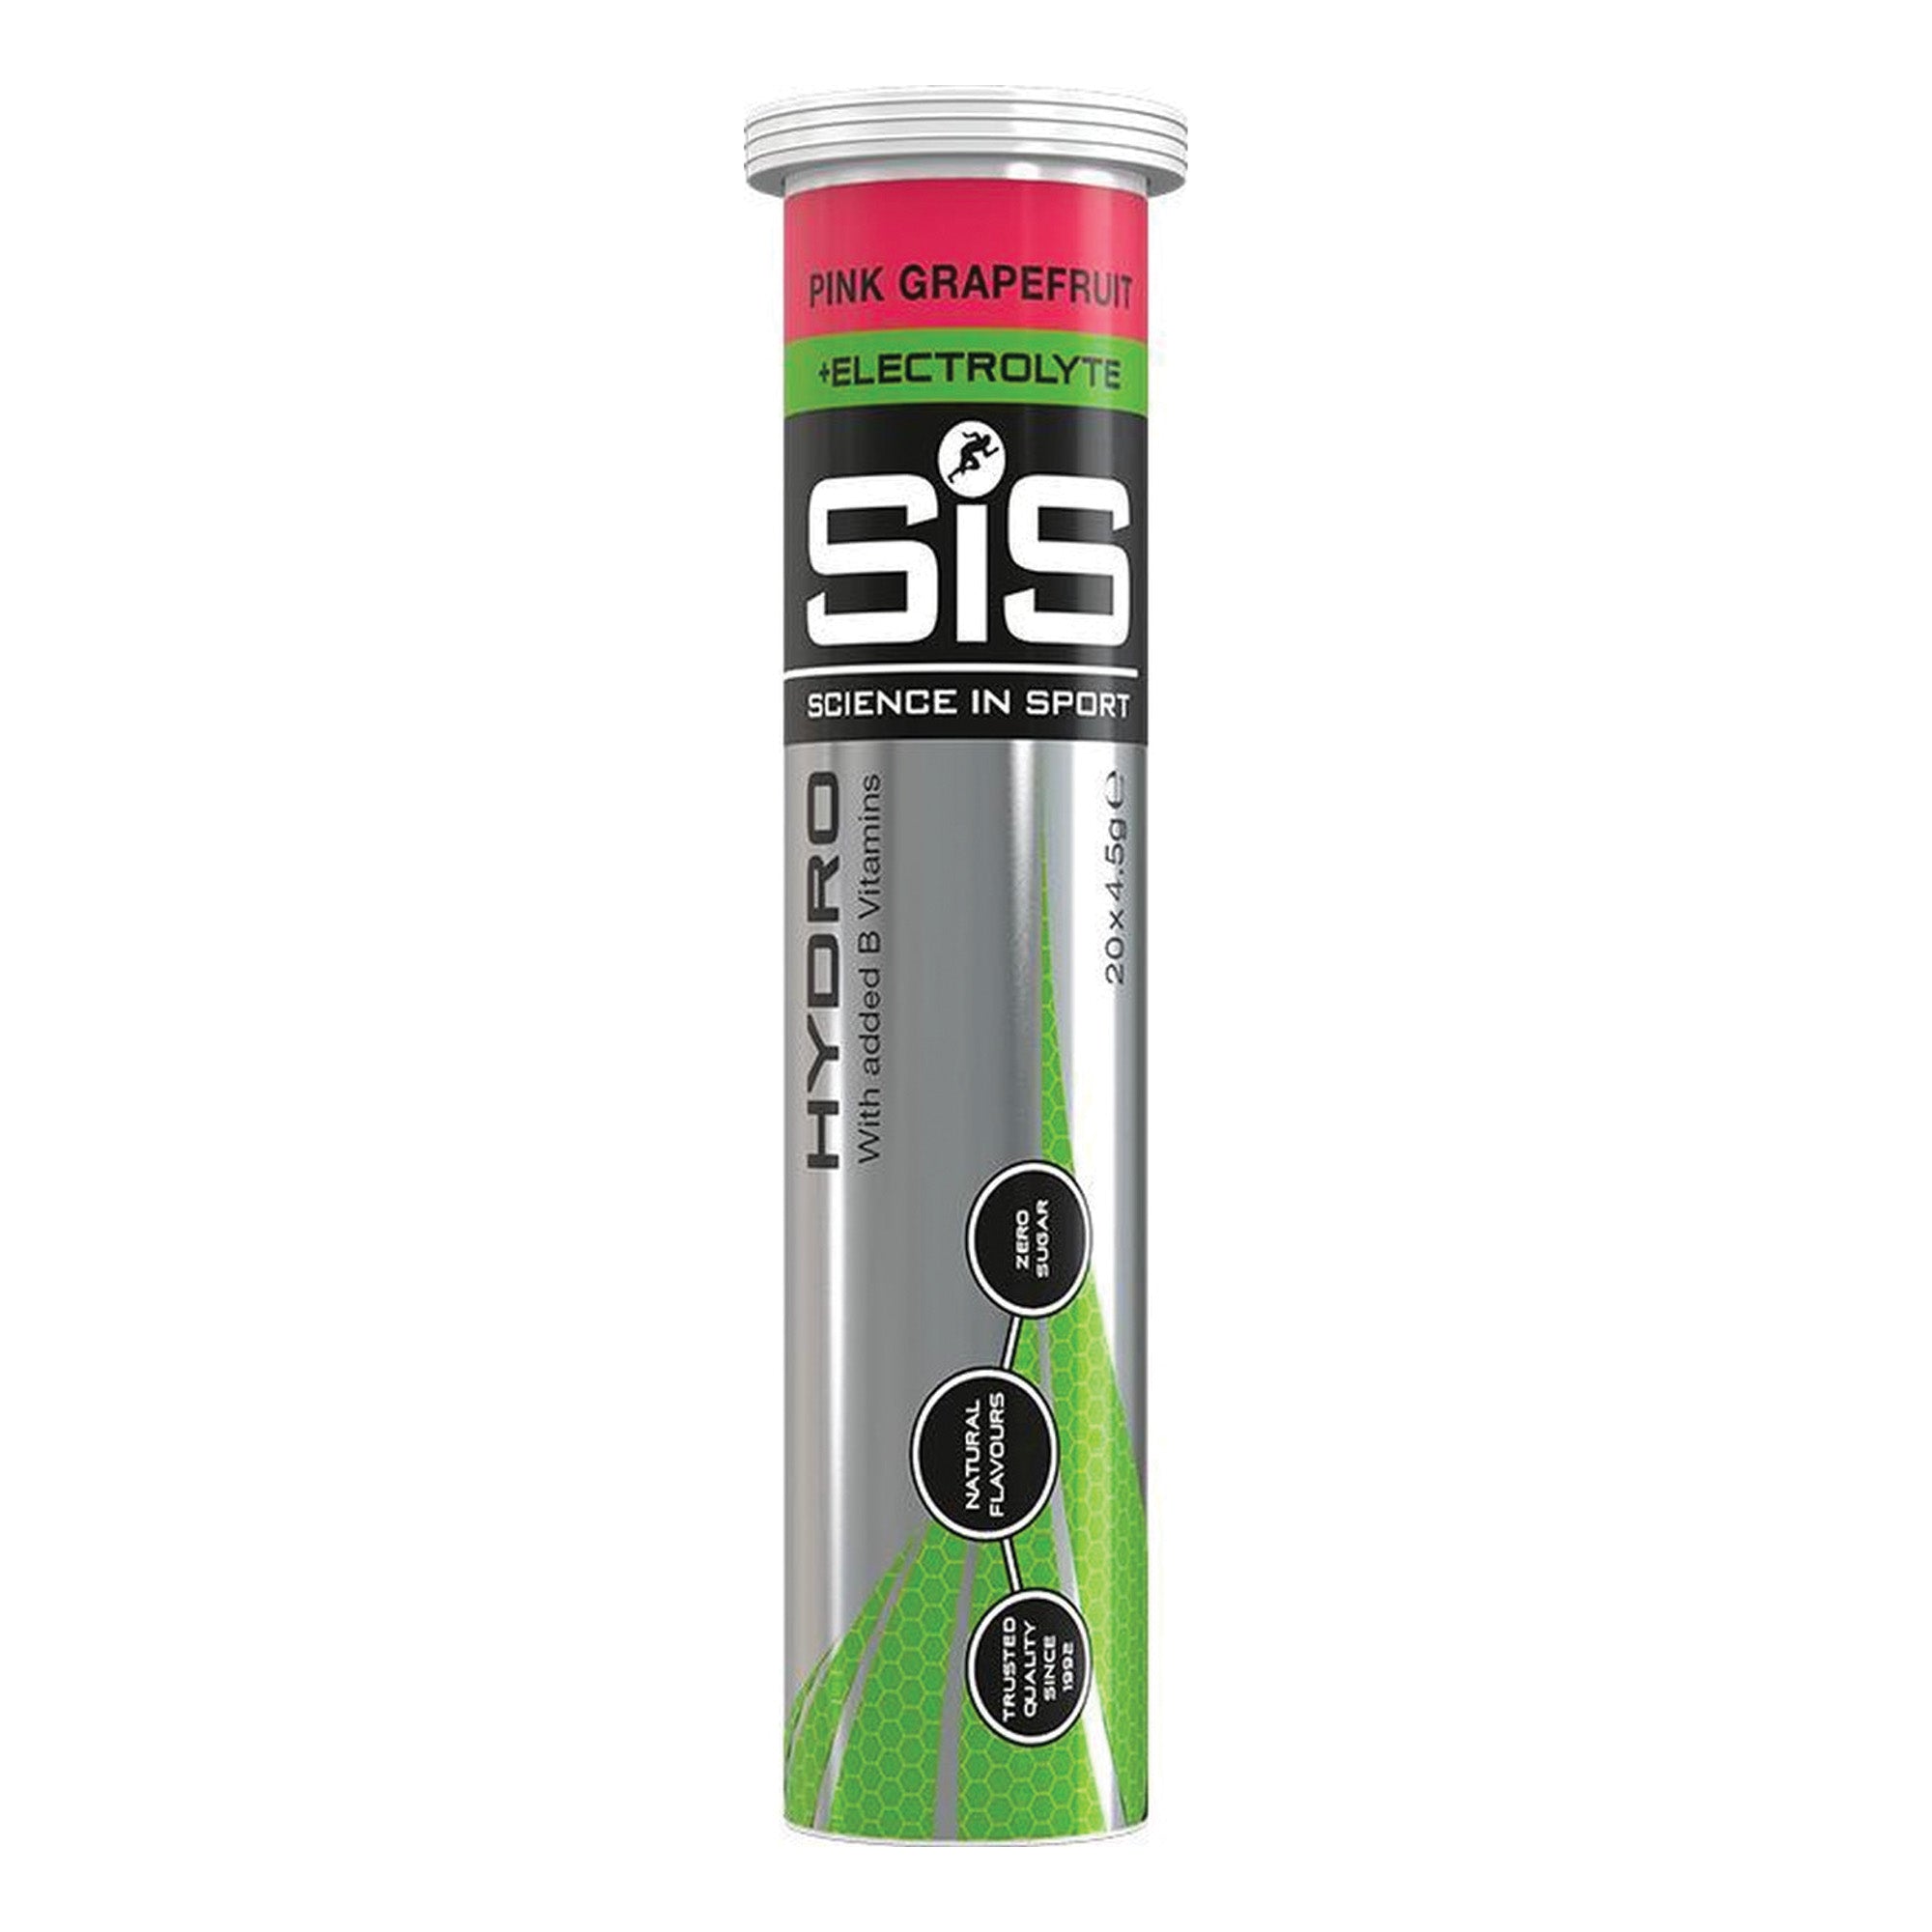 Science in Sport | SIS Go Hydro Bruistabletten | 300mg Elektrolyten | Pink Grapefruit Smaak | 20 Tabletten per verpakking